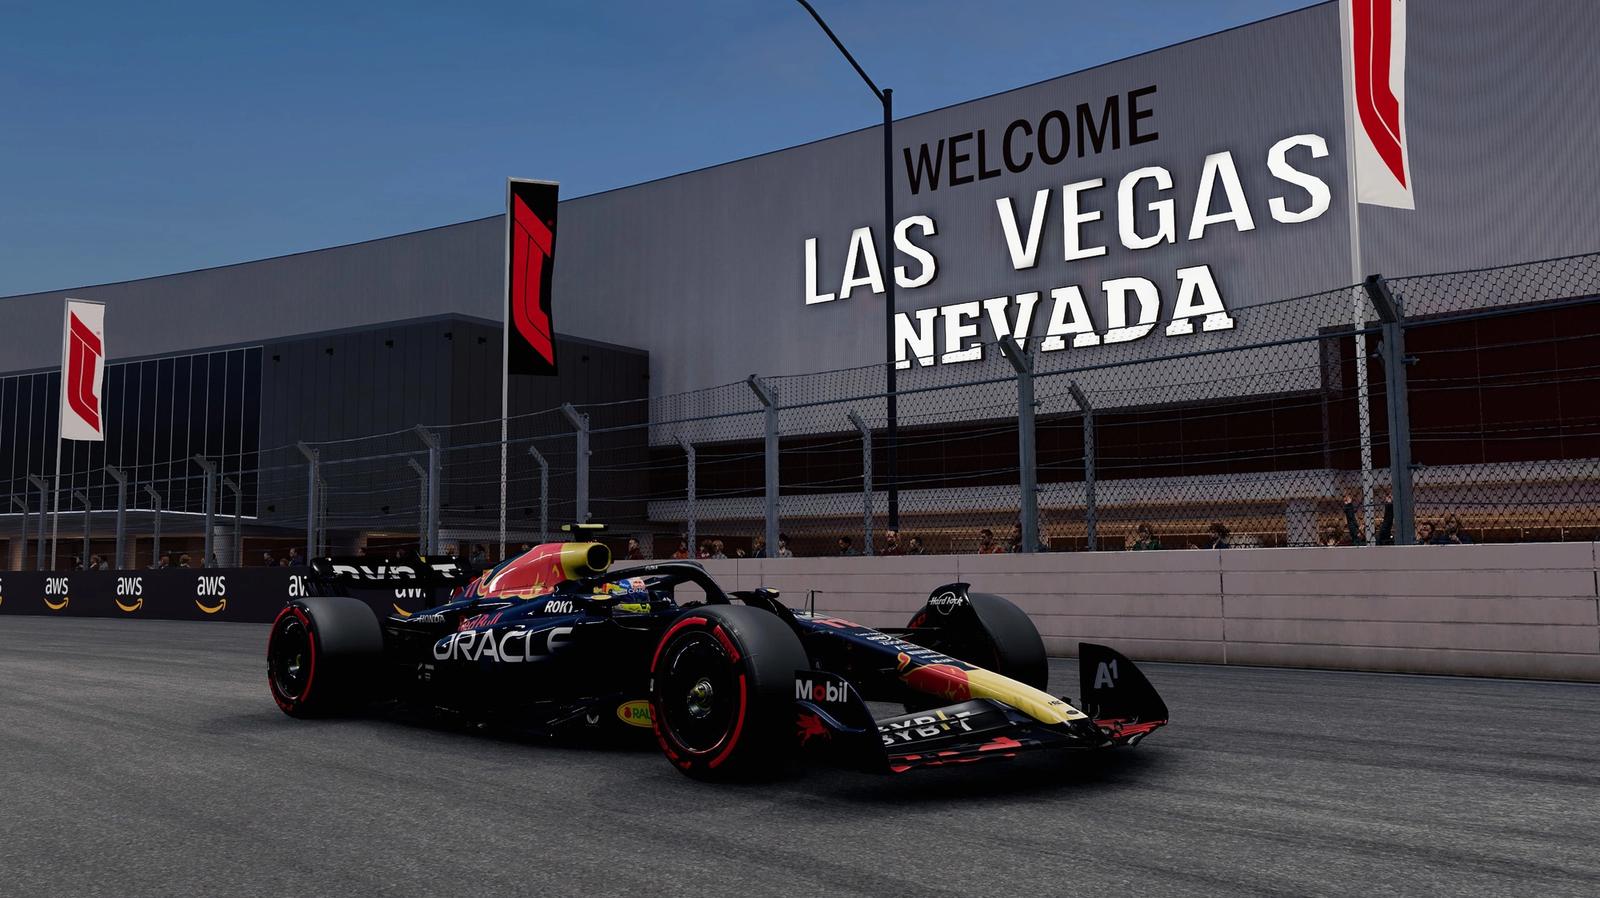 F1 23 Las Vegas Setup: Online, career mode, and my team settings